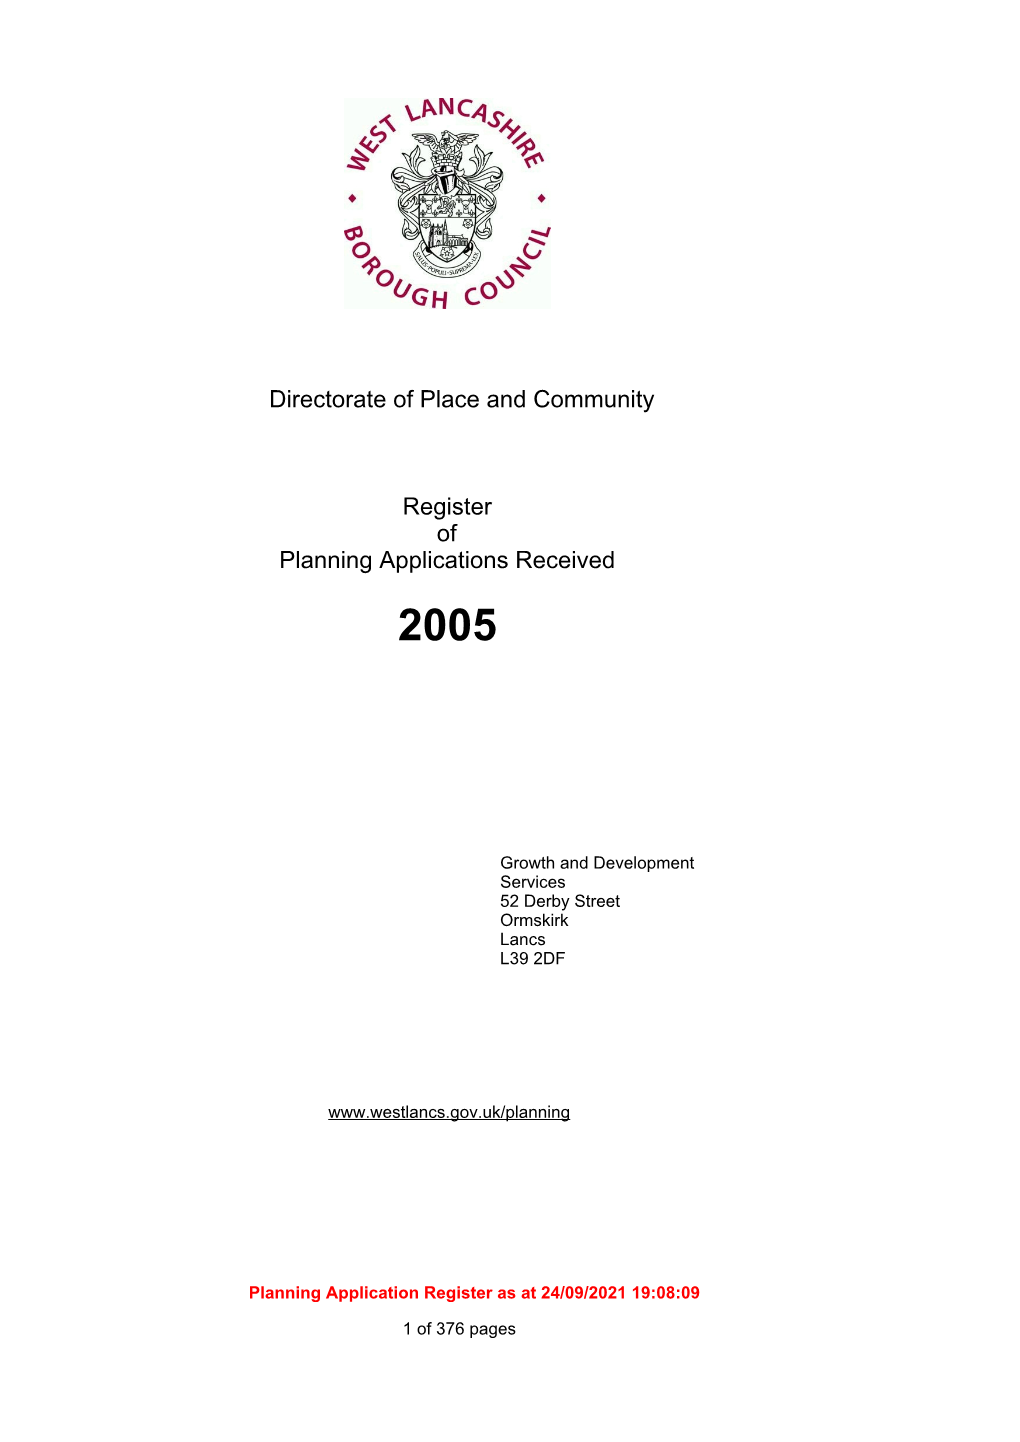 Register of Planning Applications 2005